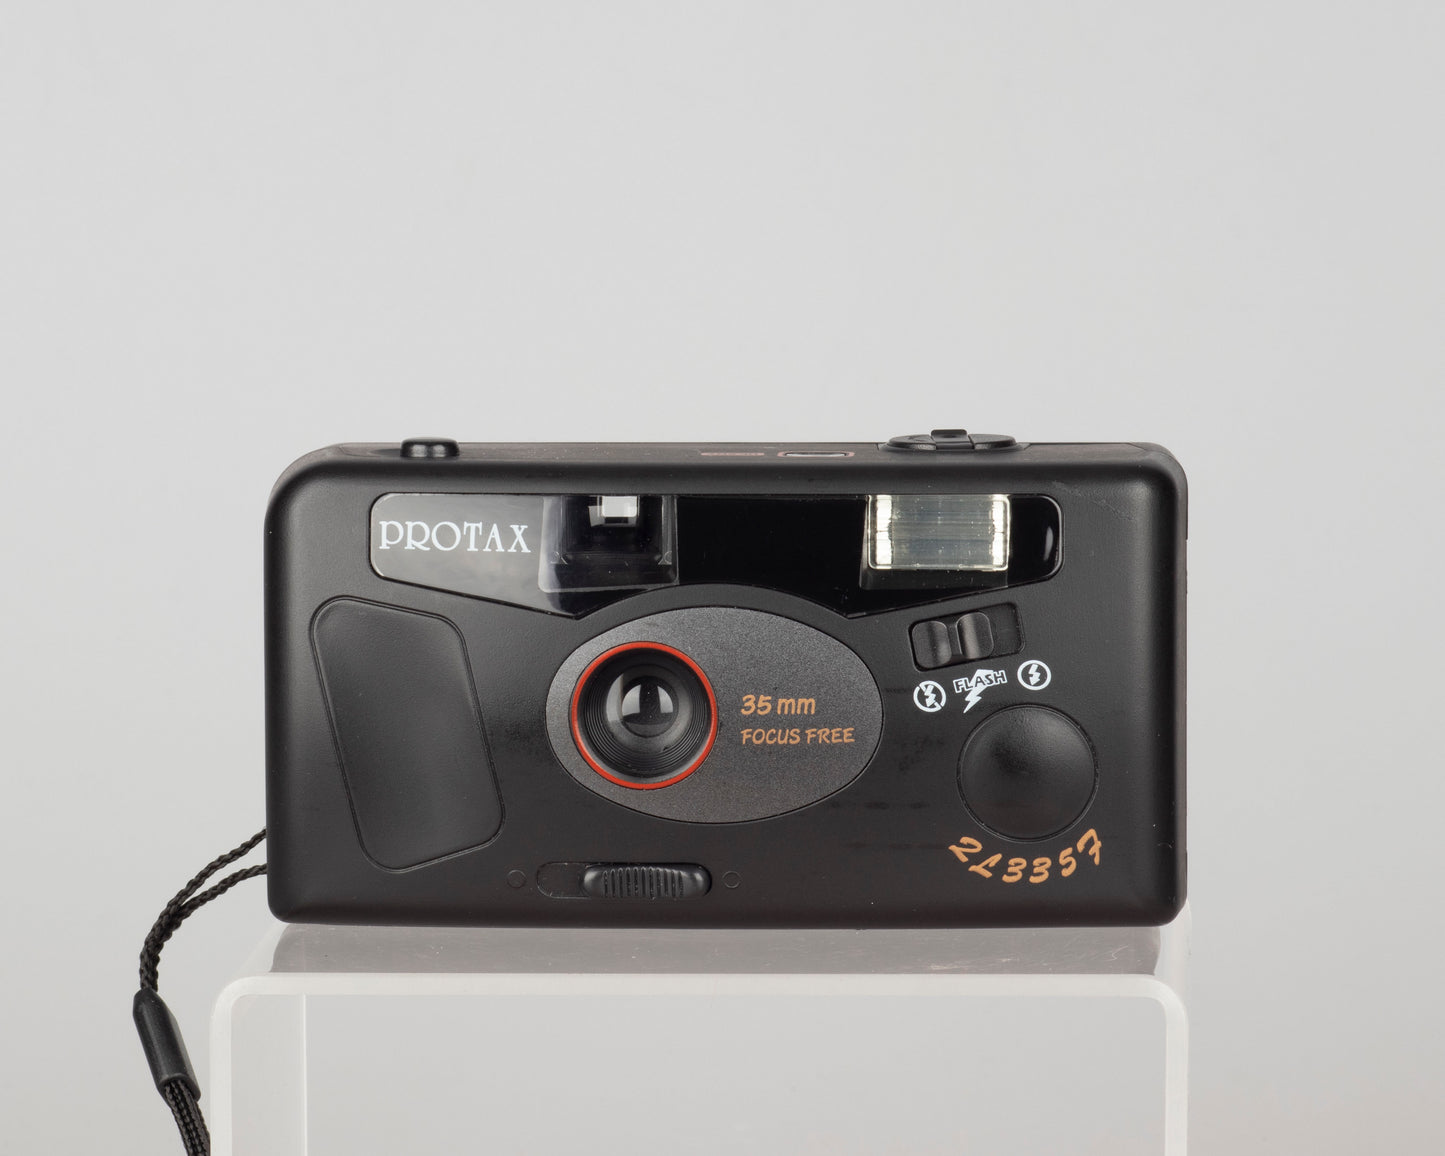 Protax 35mm Focus Free camera